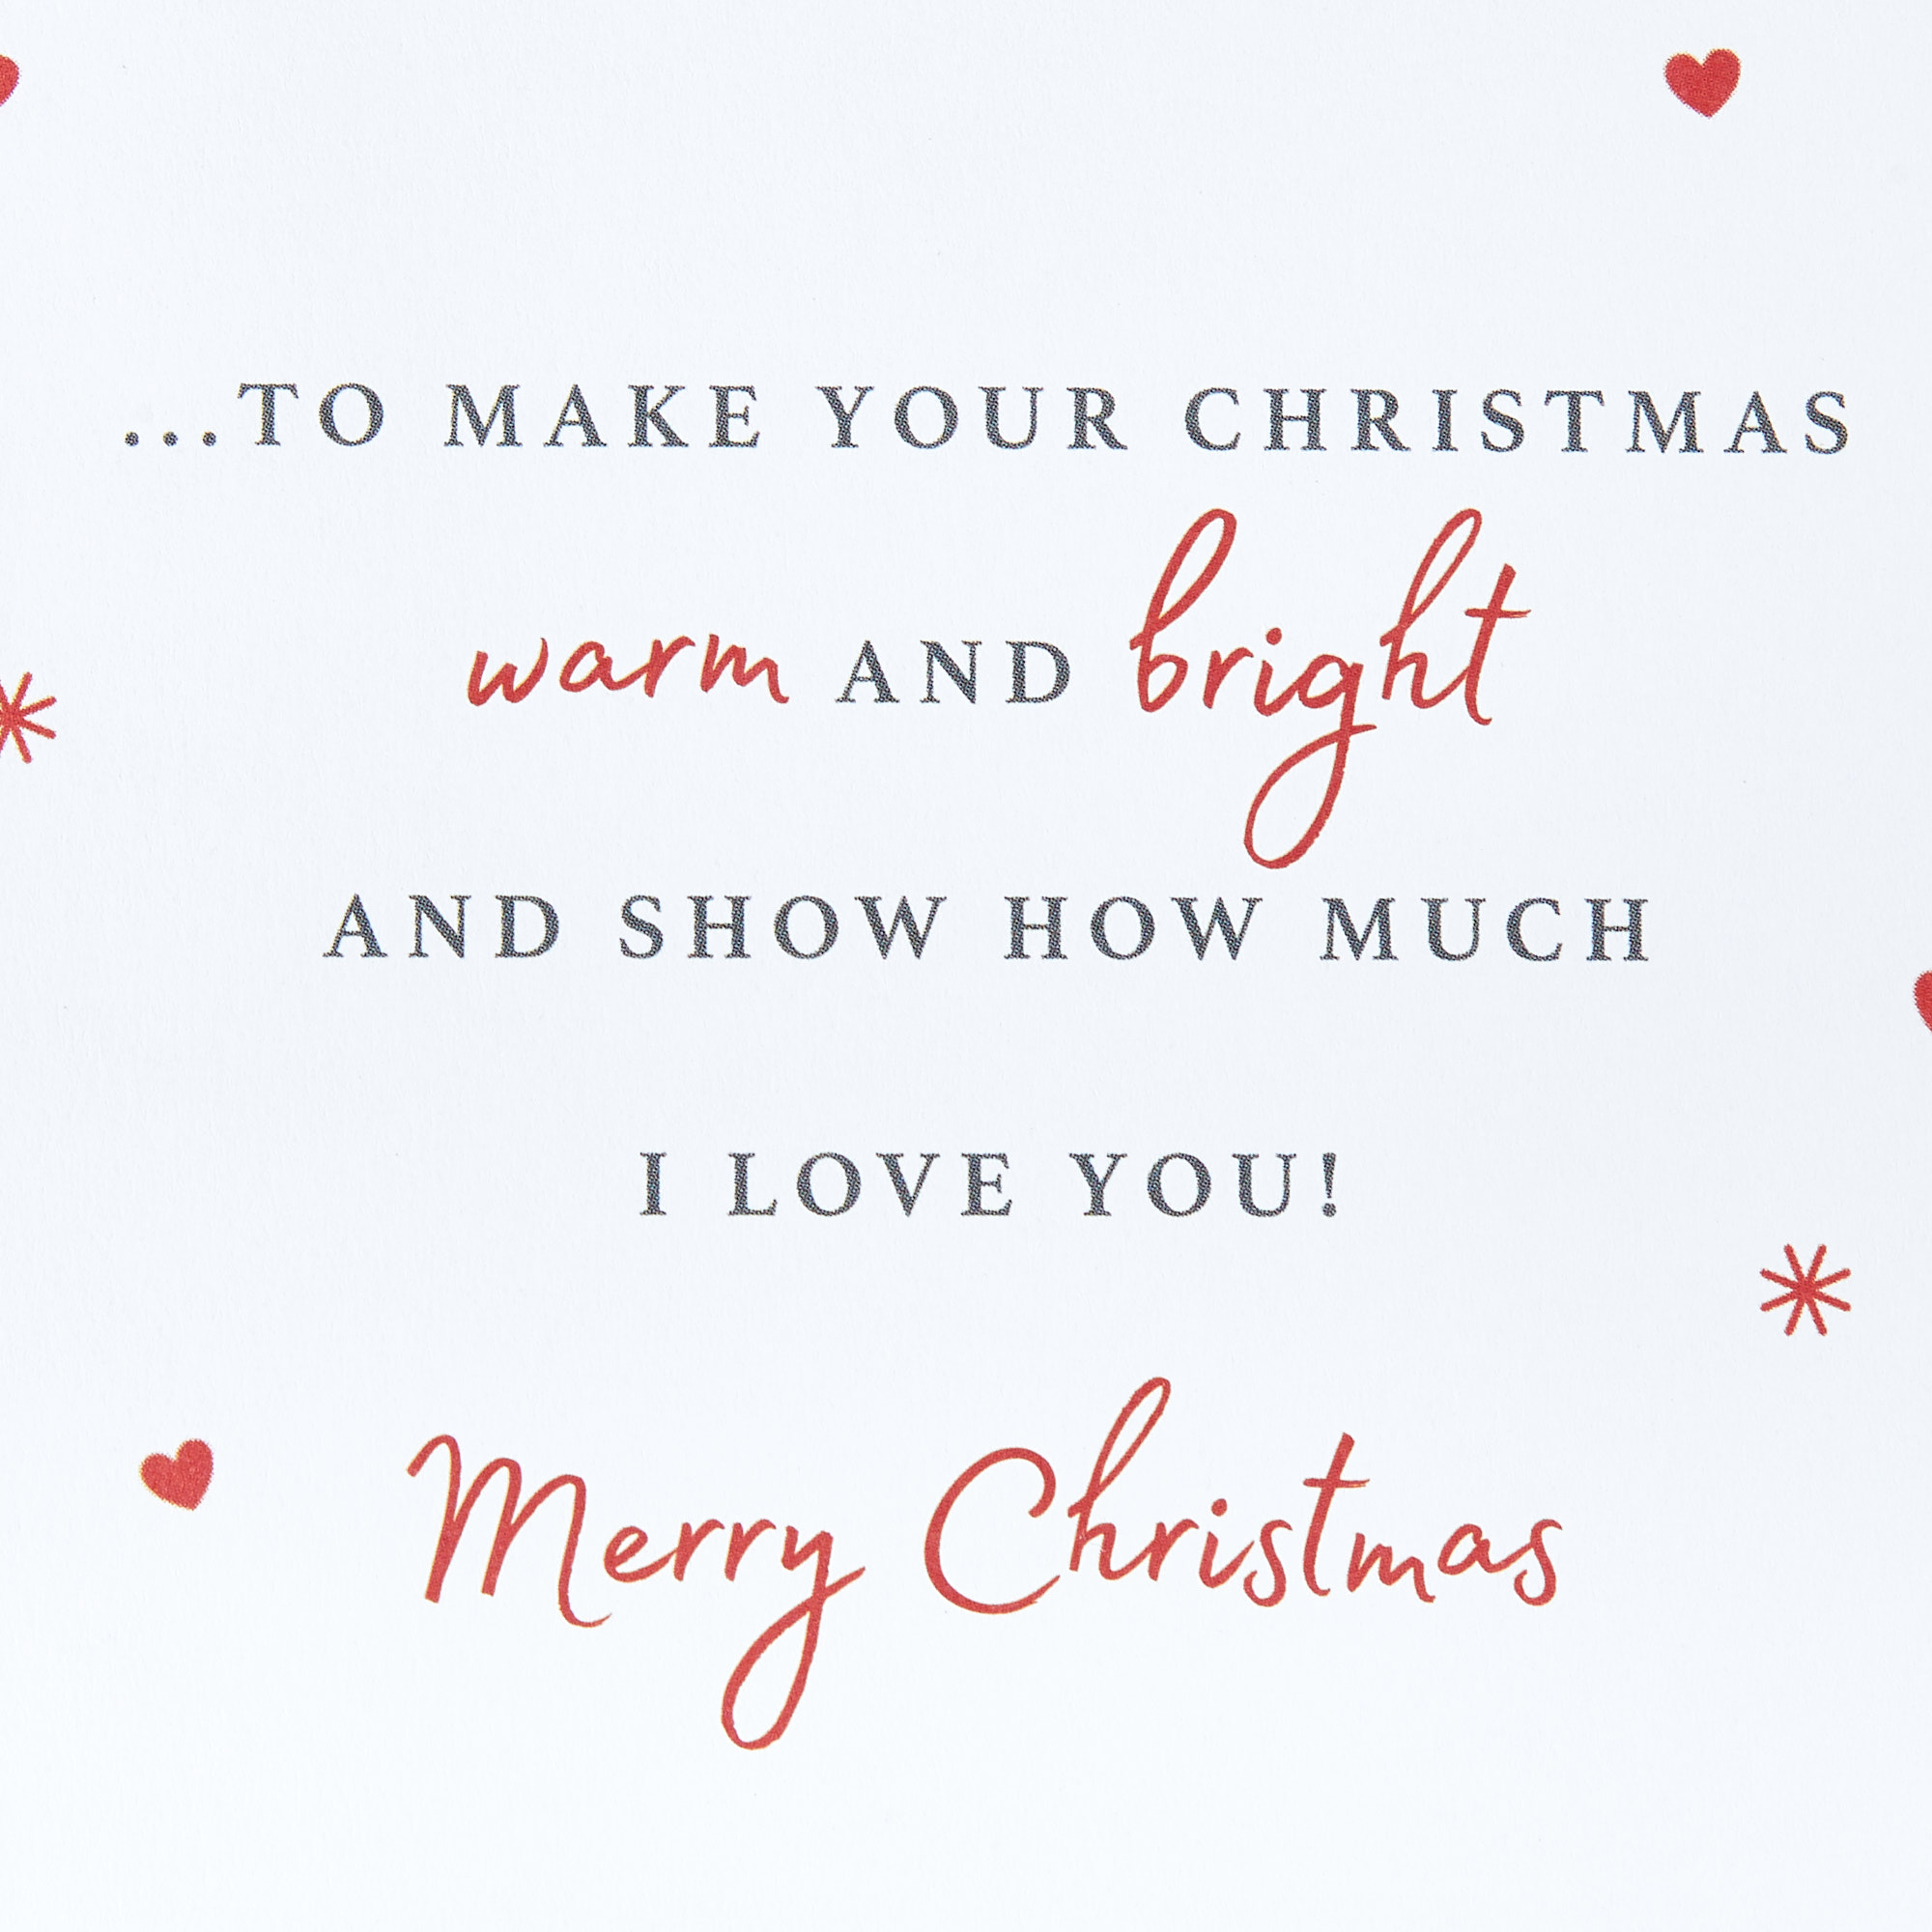 Christmas Card - Wonderful Girlfriend Never-Ending Joy